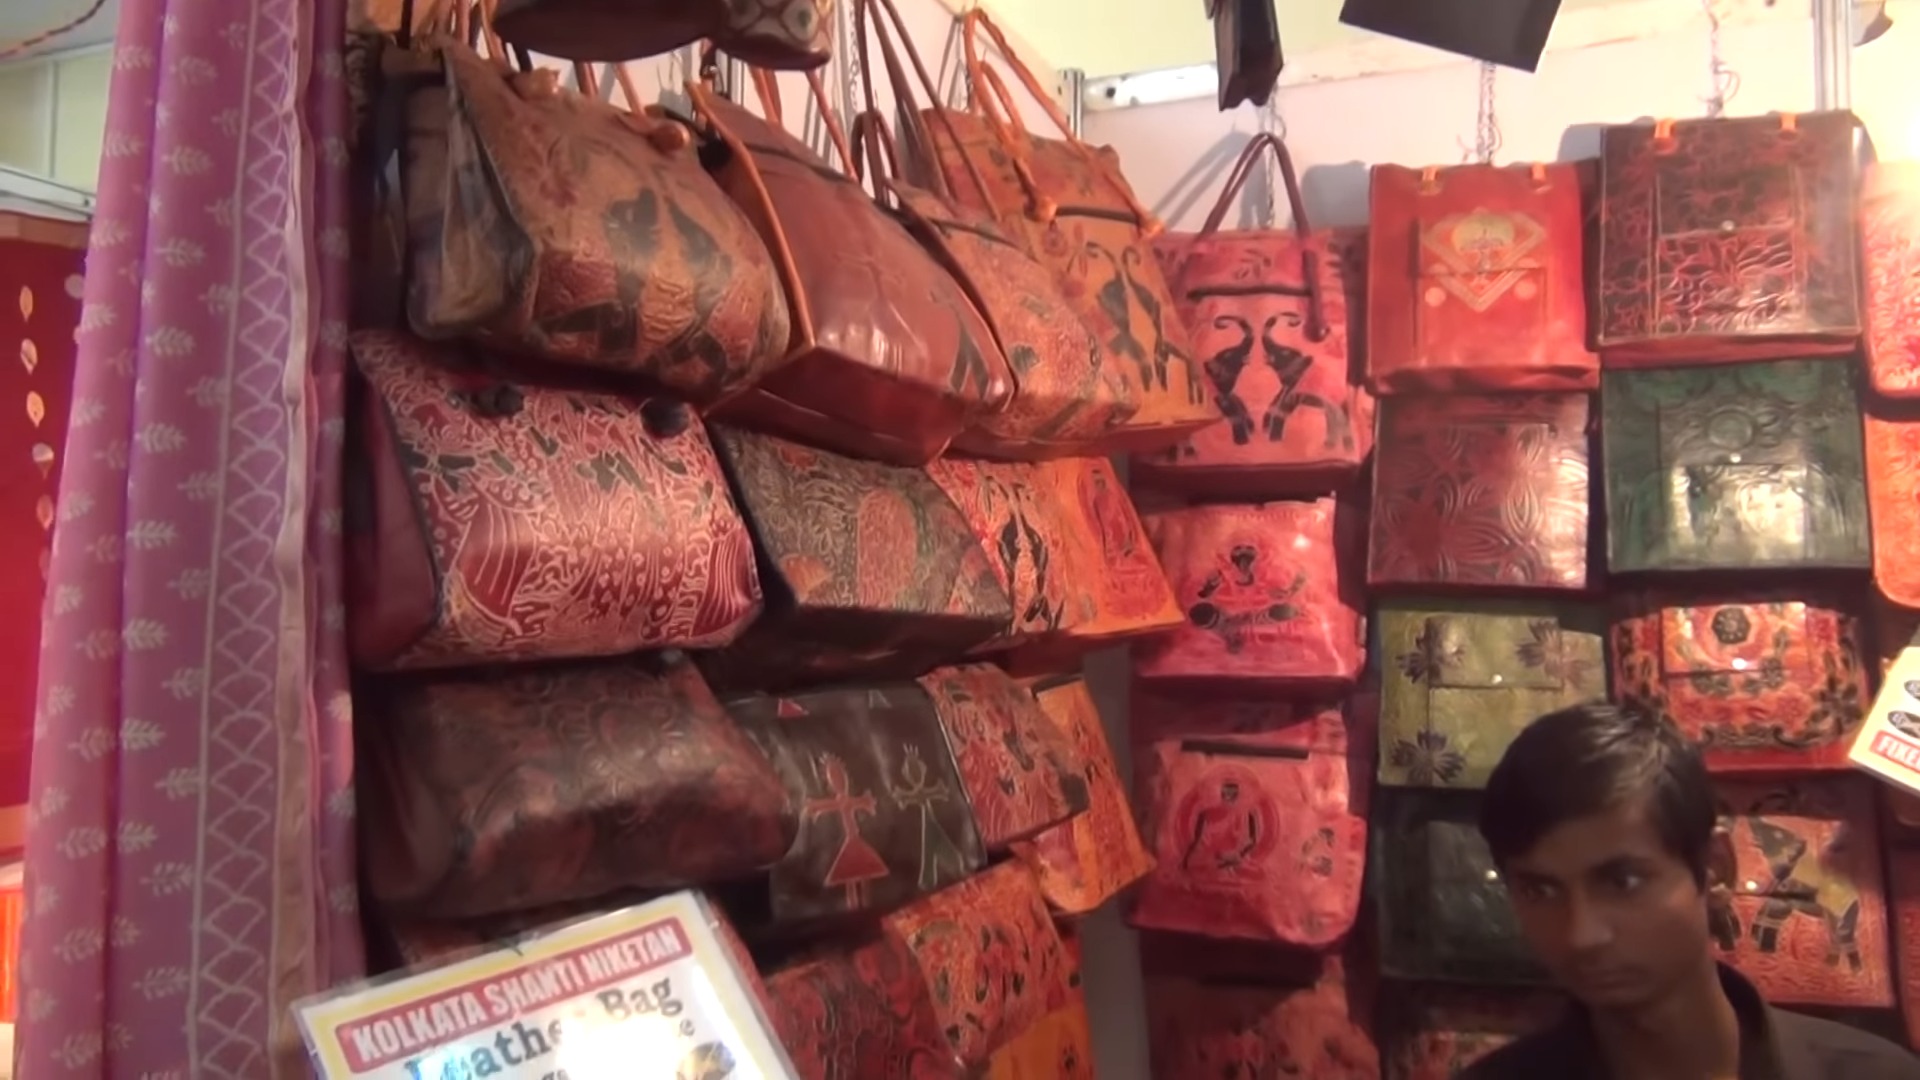 TANN IN Shantiniketan Leather magnet closer Clutch bag | Indian Business  Portal